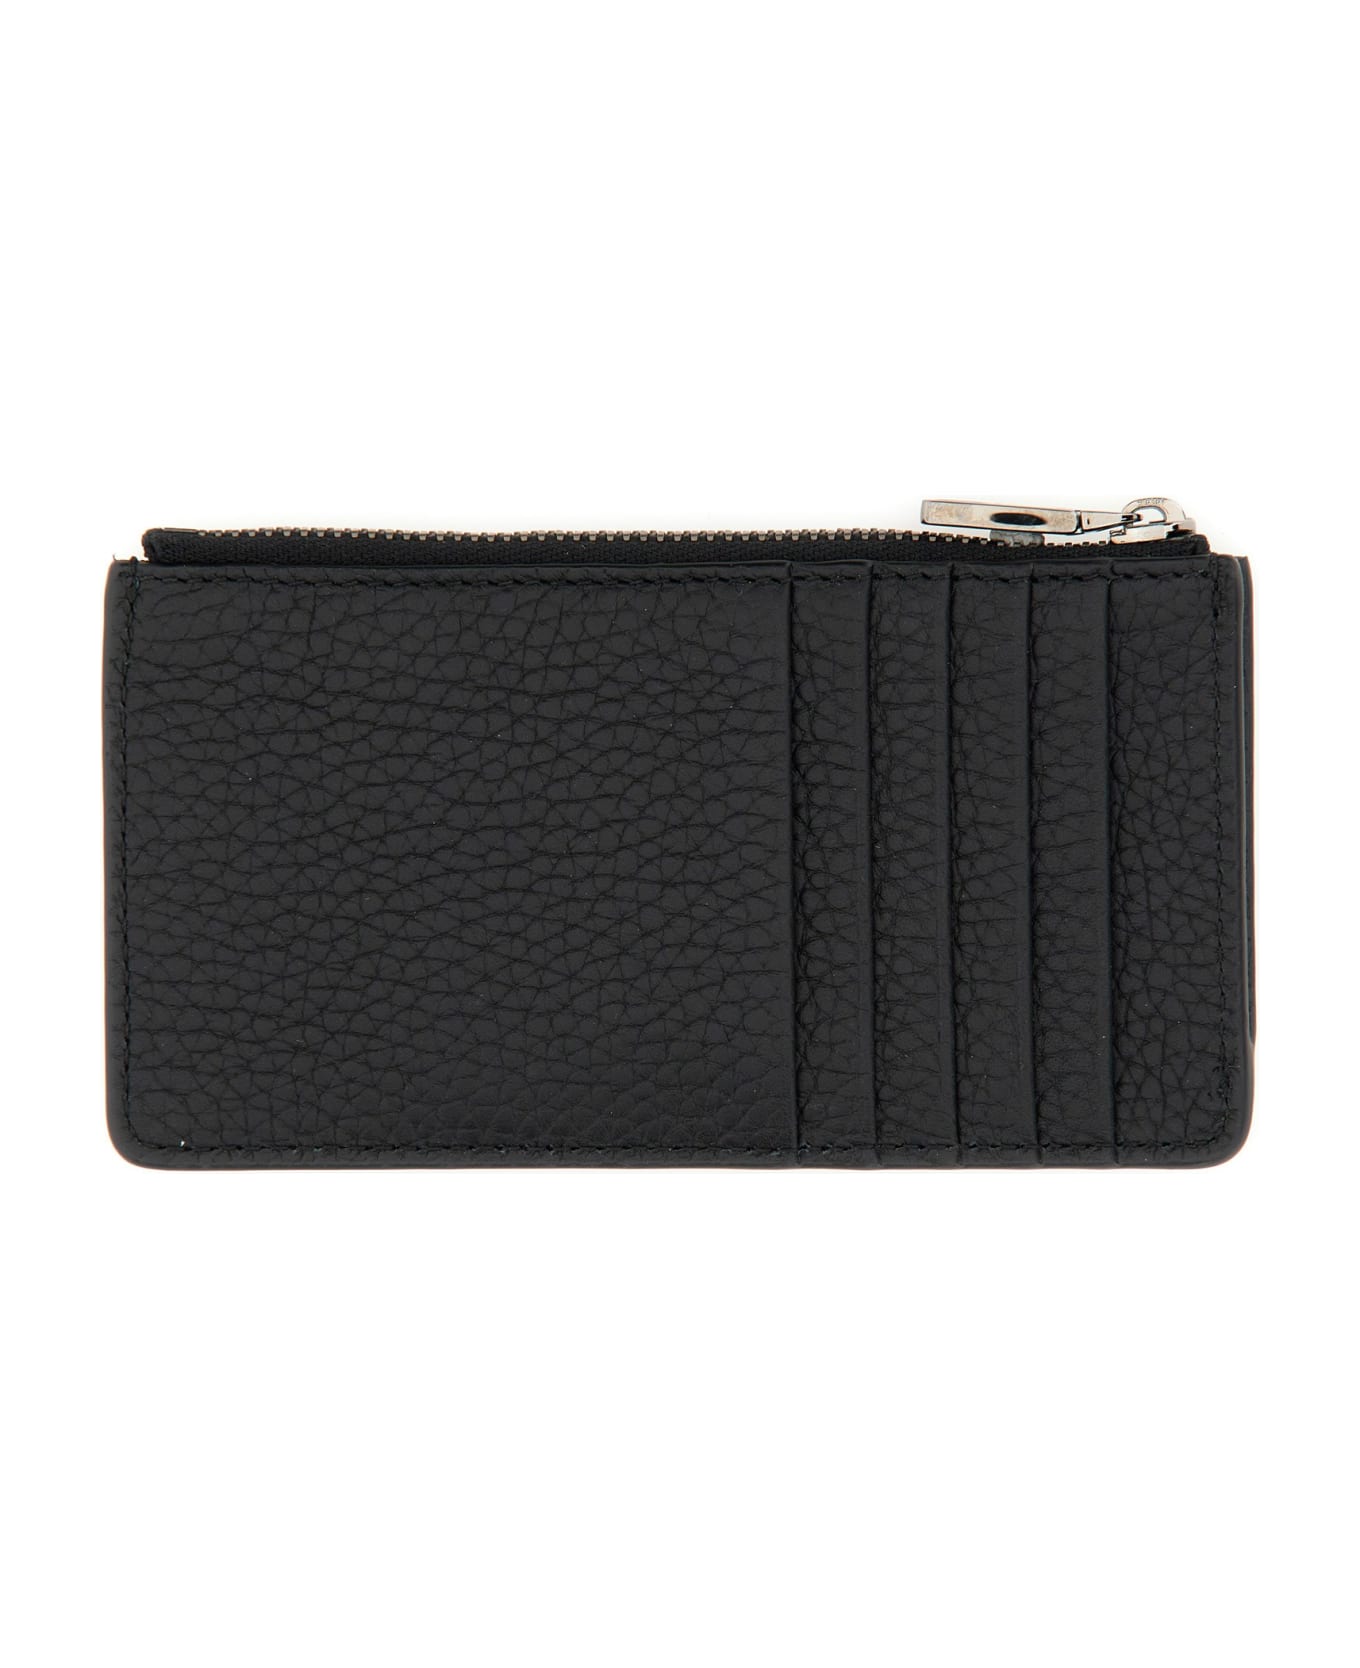 Dolce & Gabbana Leather Card Holder - NERO